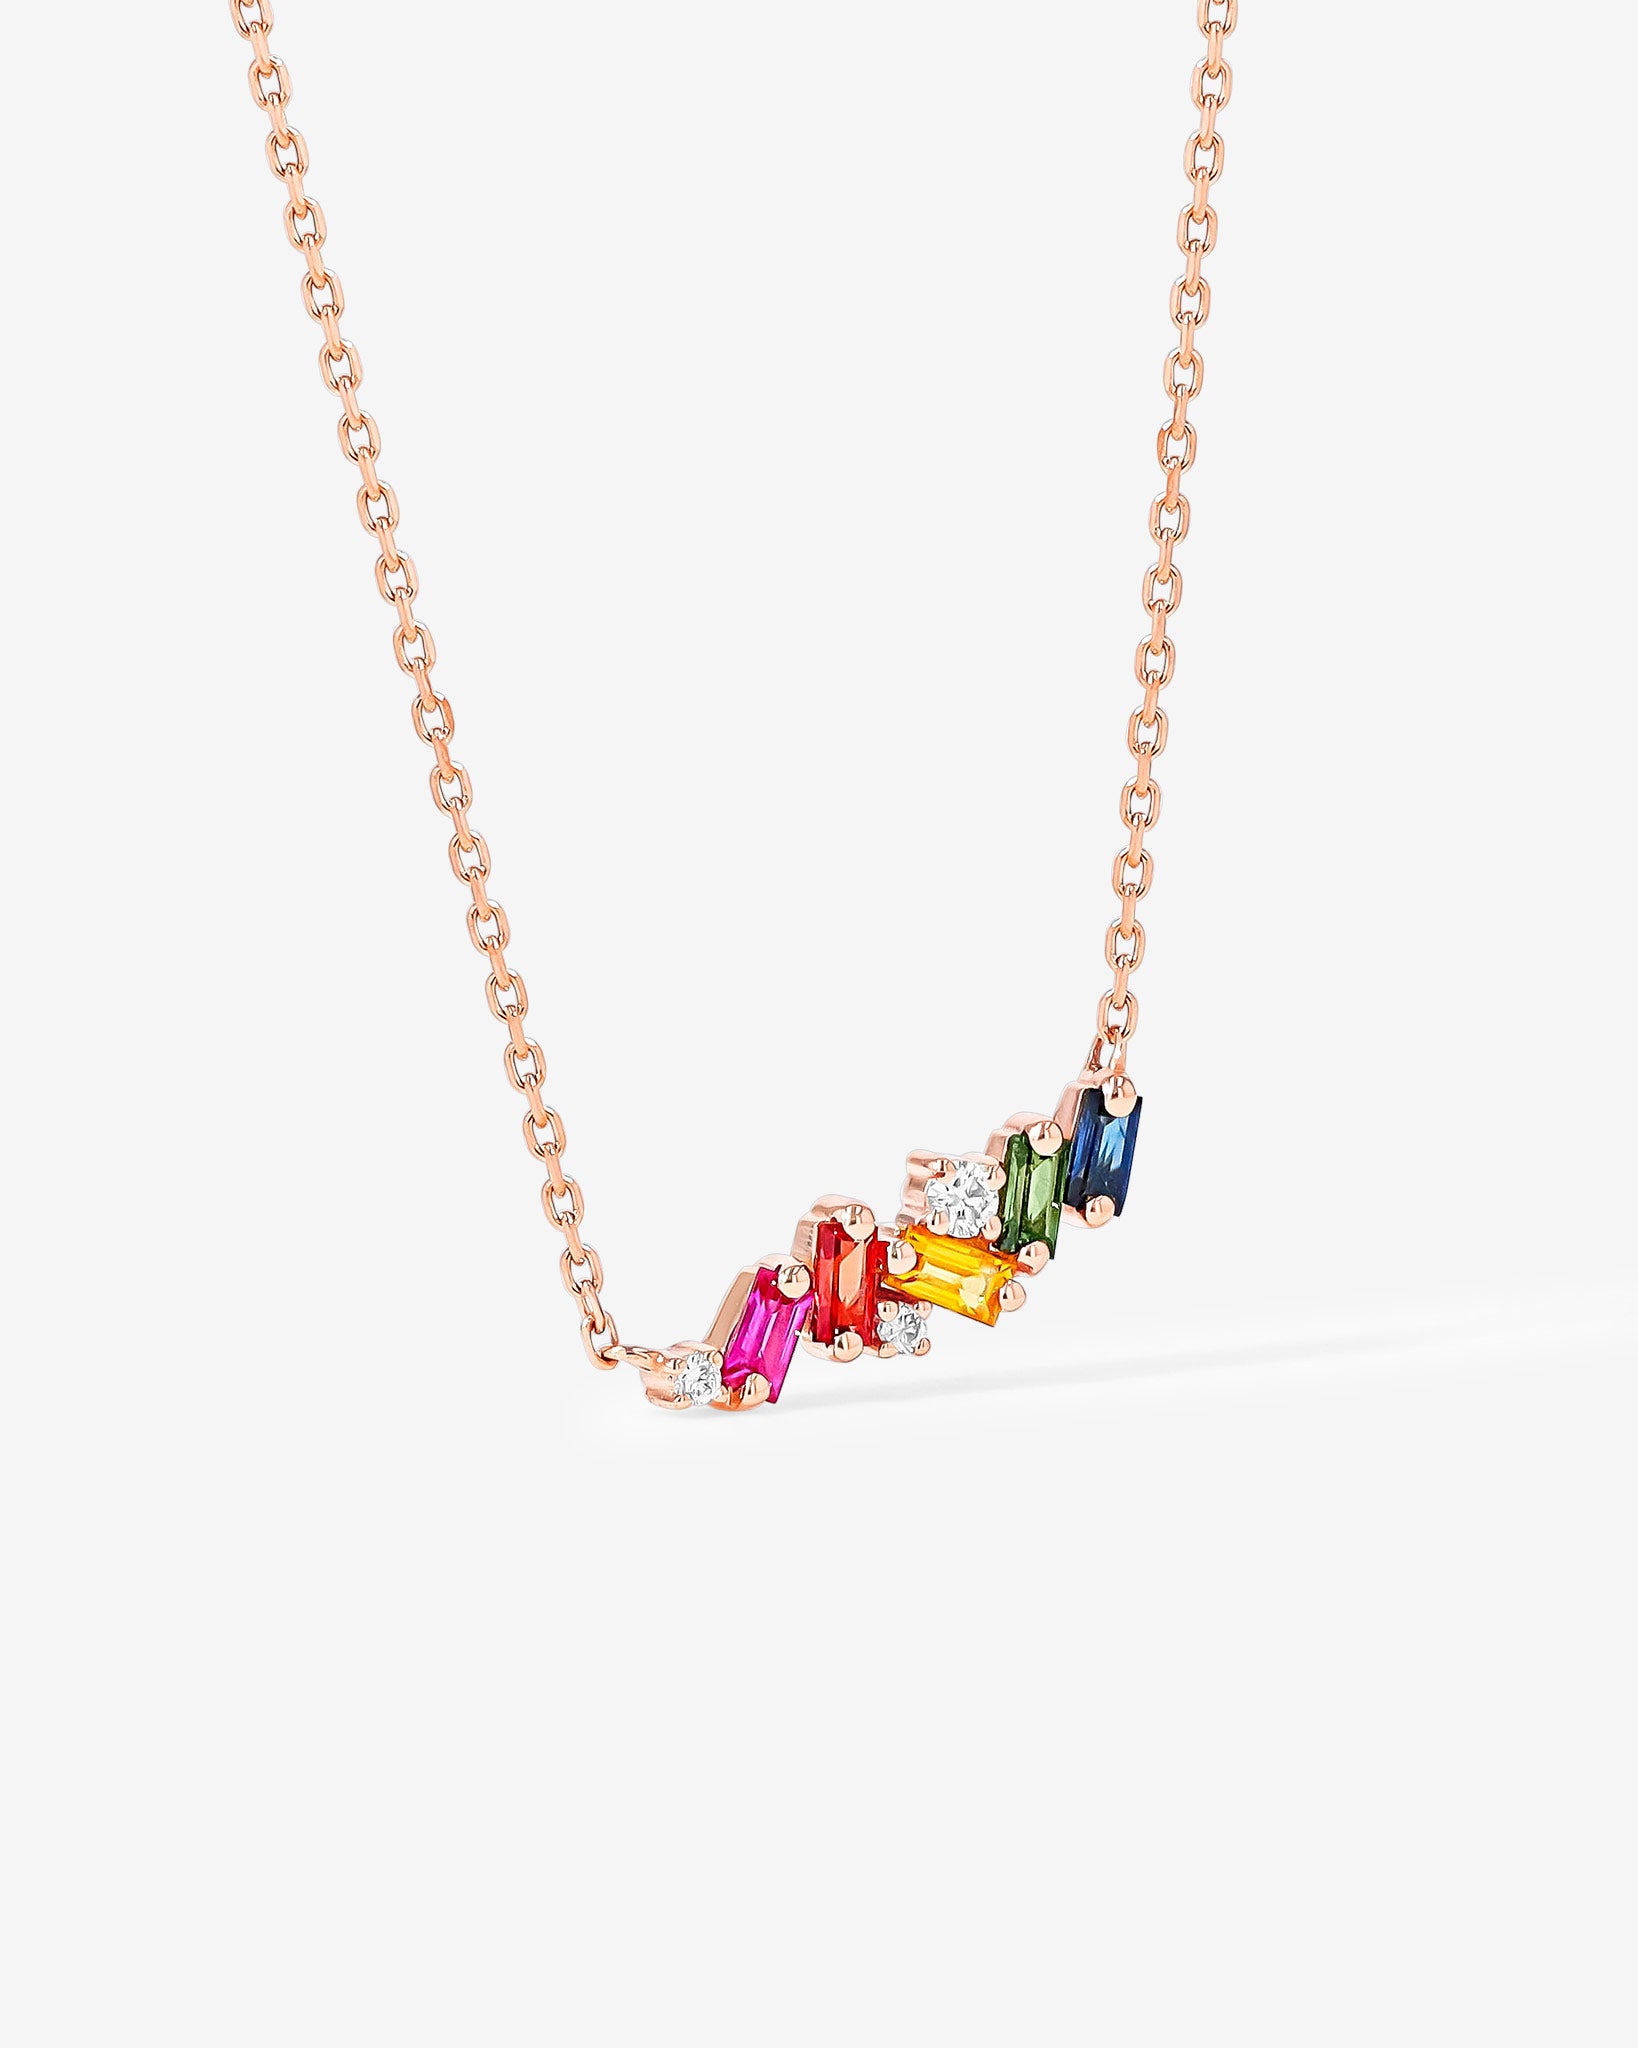 Suzanne Kalan Frenzy Rainbow Sapphire Mini Bar Pendant in 18k rose gold